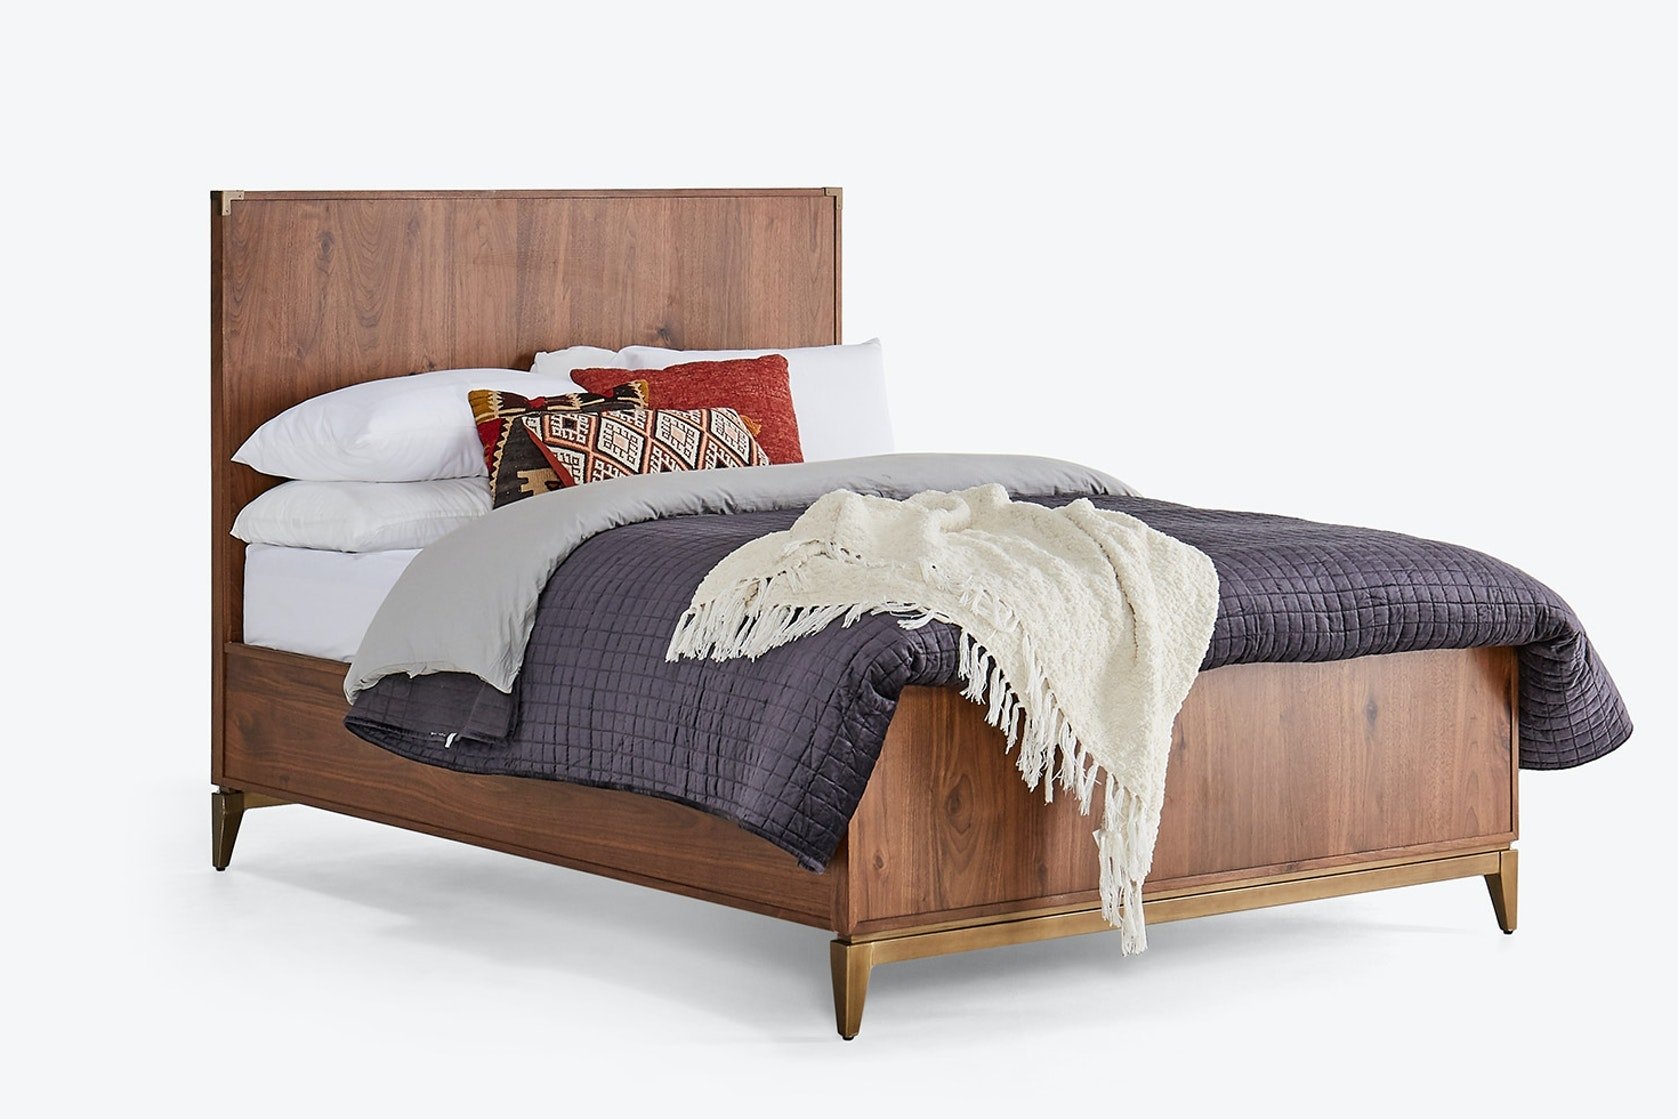 Fenton Mid Century Modern Bed - Queen - Image 4